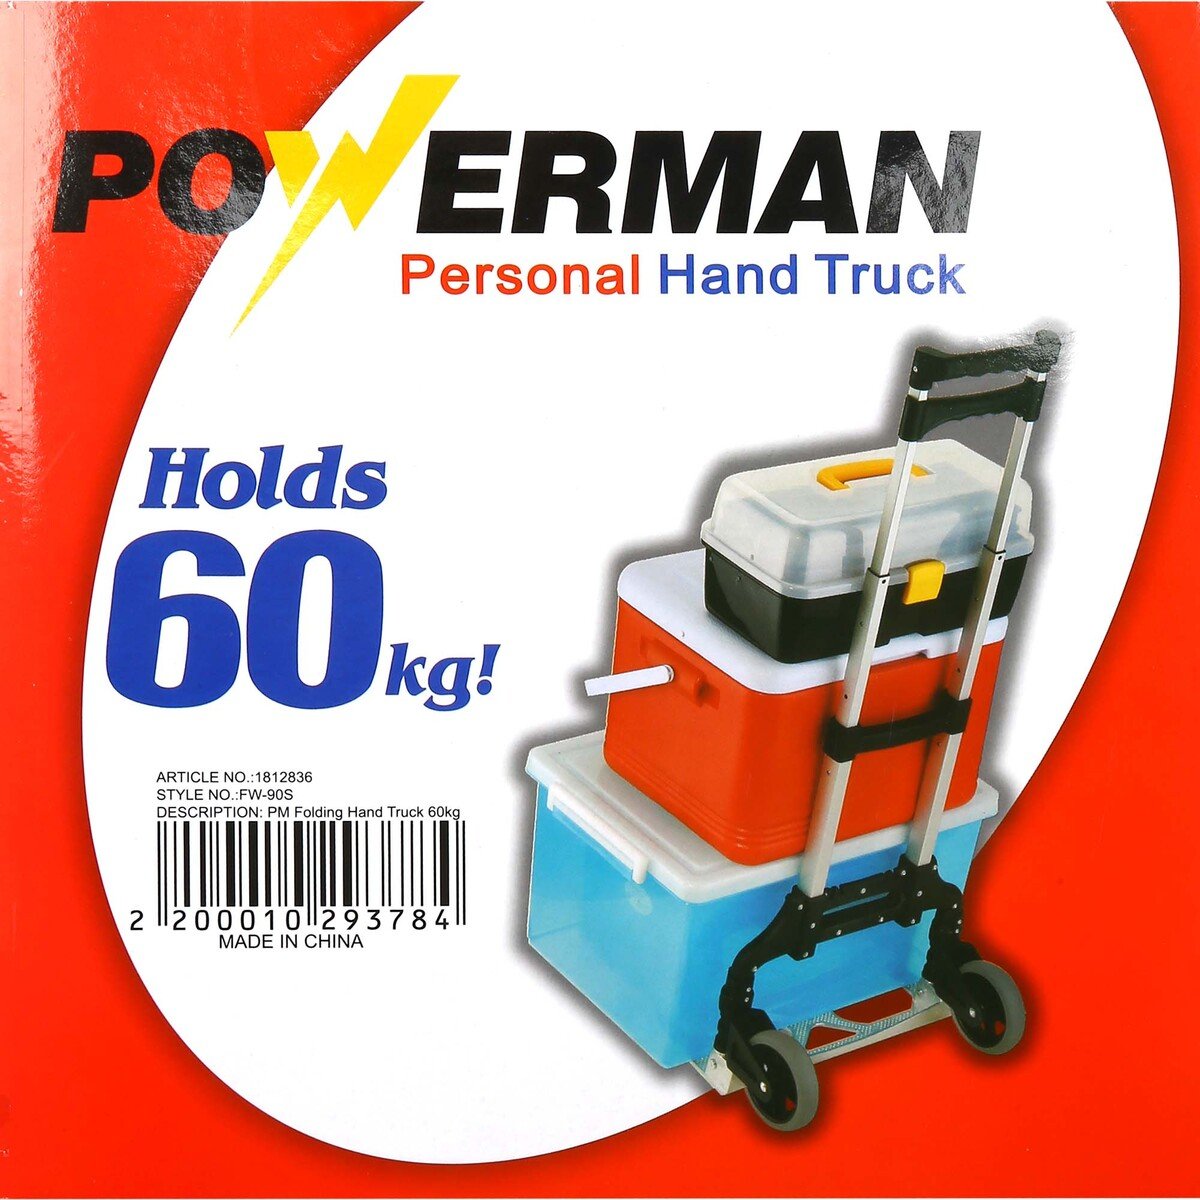 Powerman Folding Hand Truck FW90S 60kg